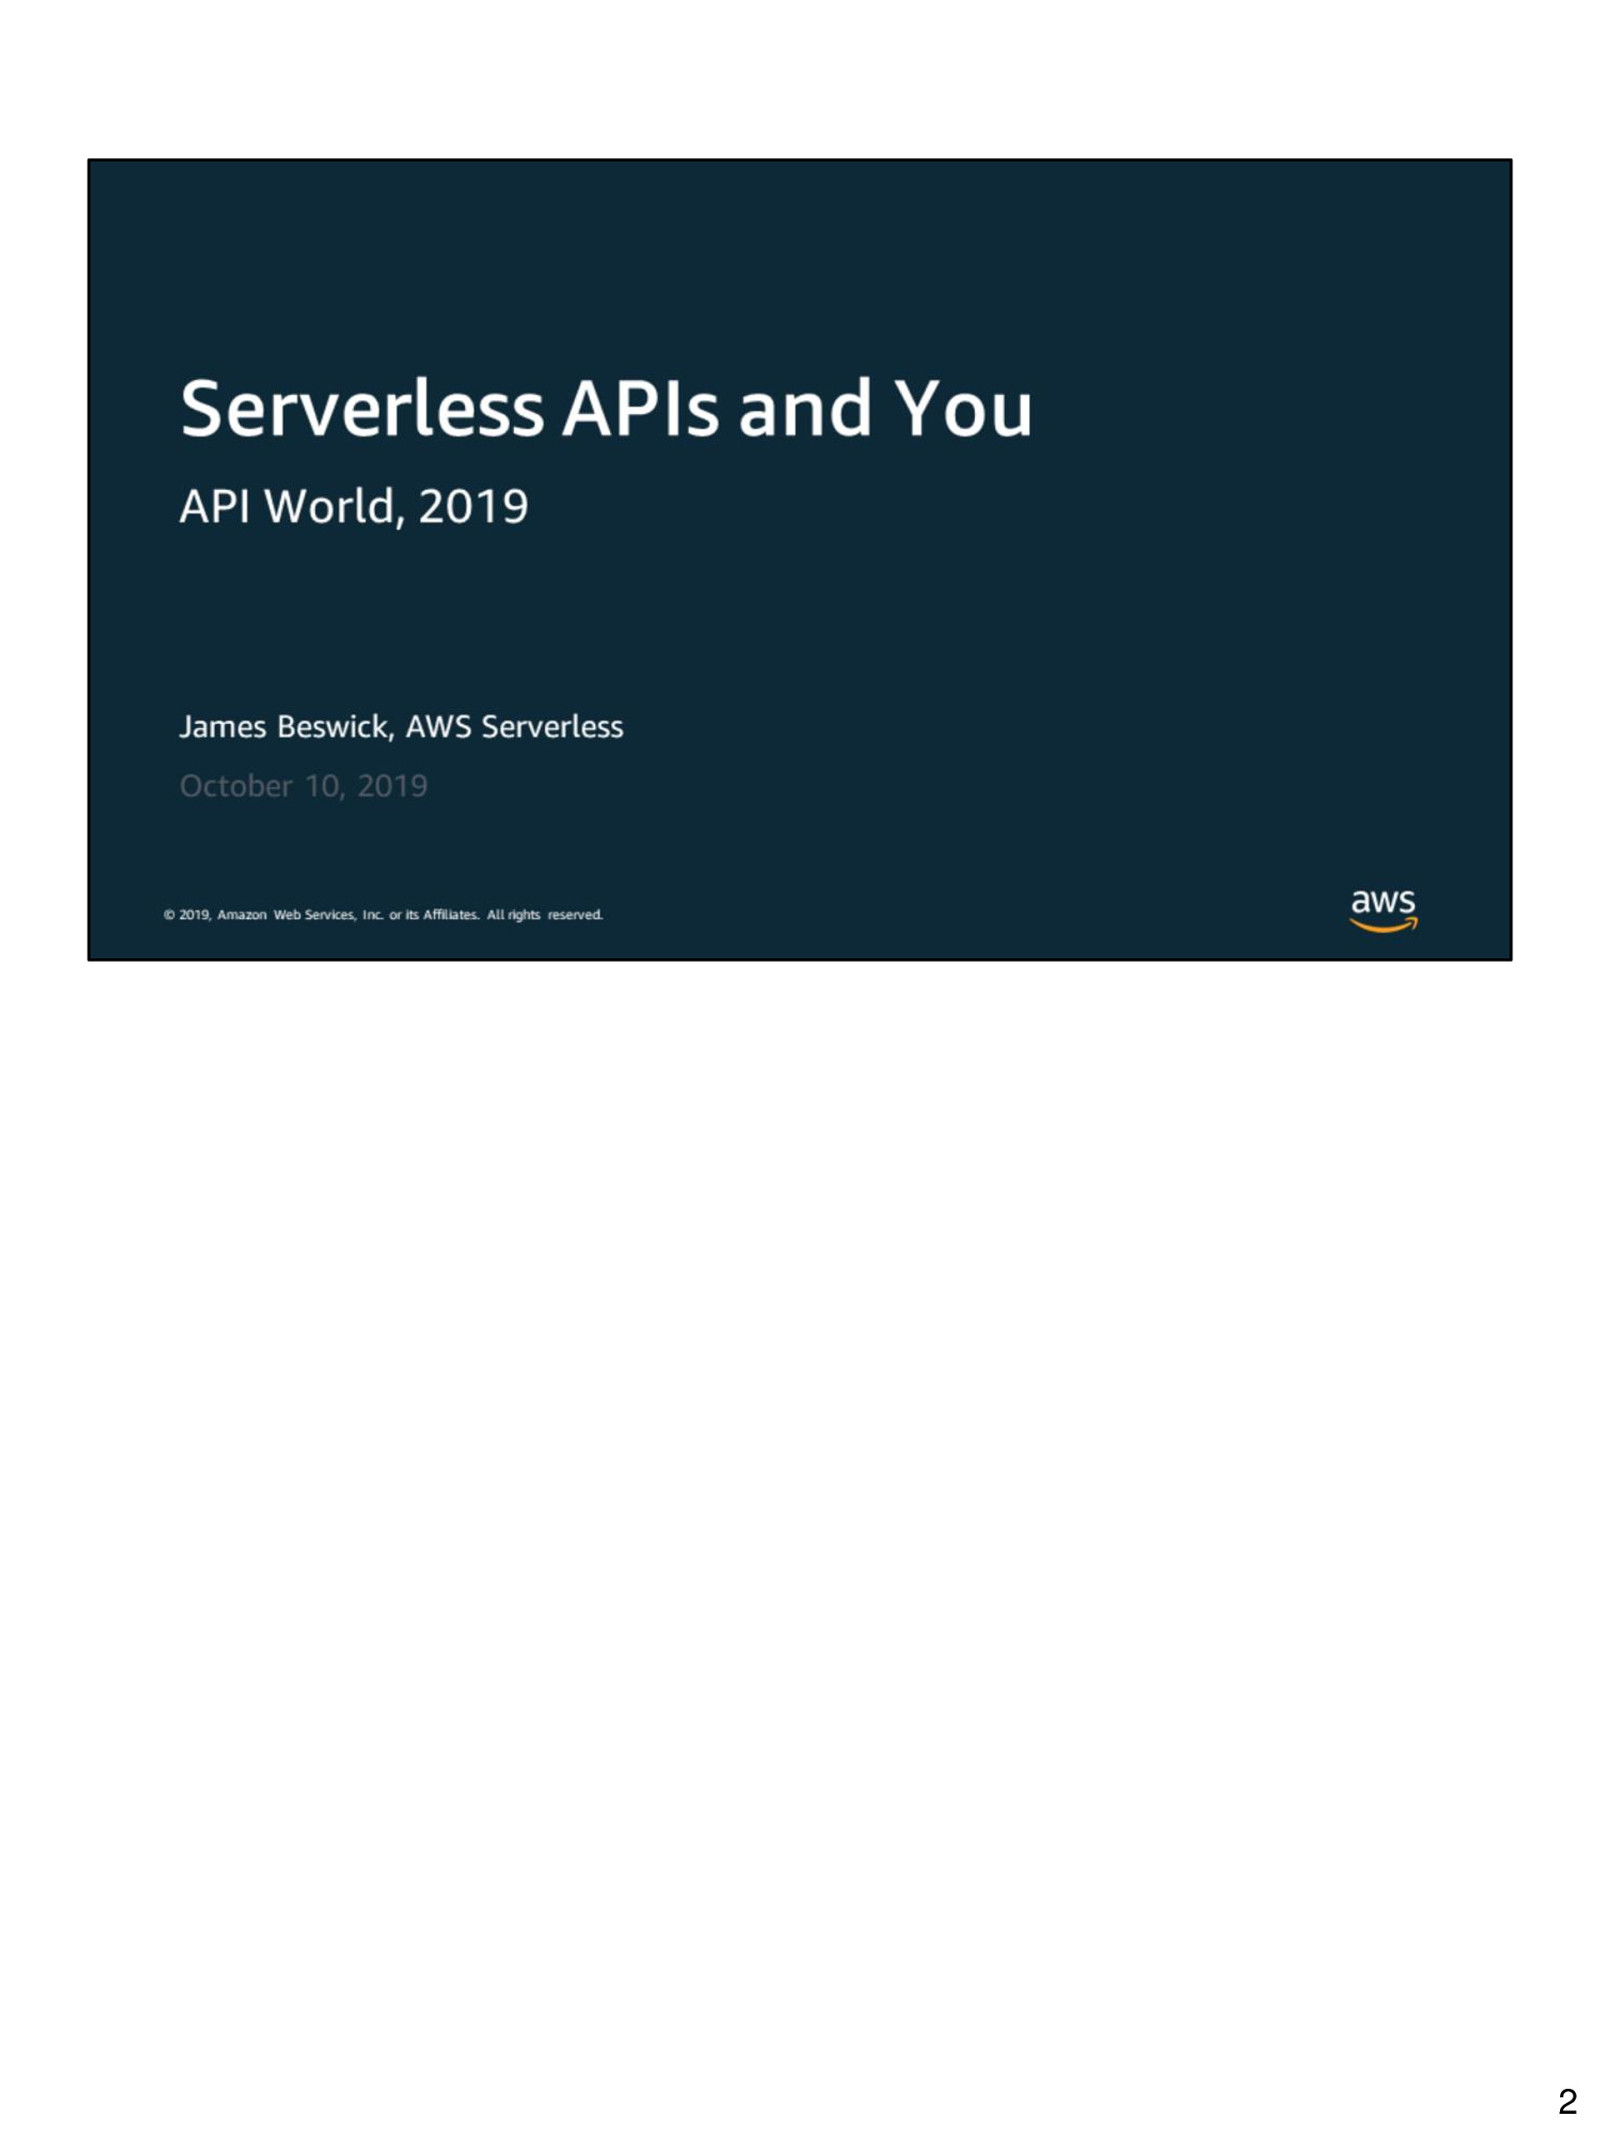 Serverless APIs and you